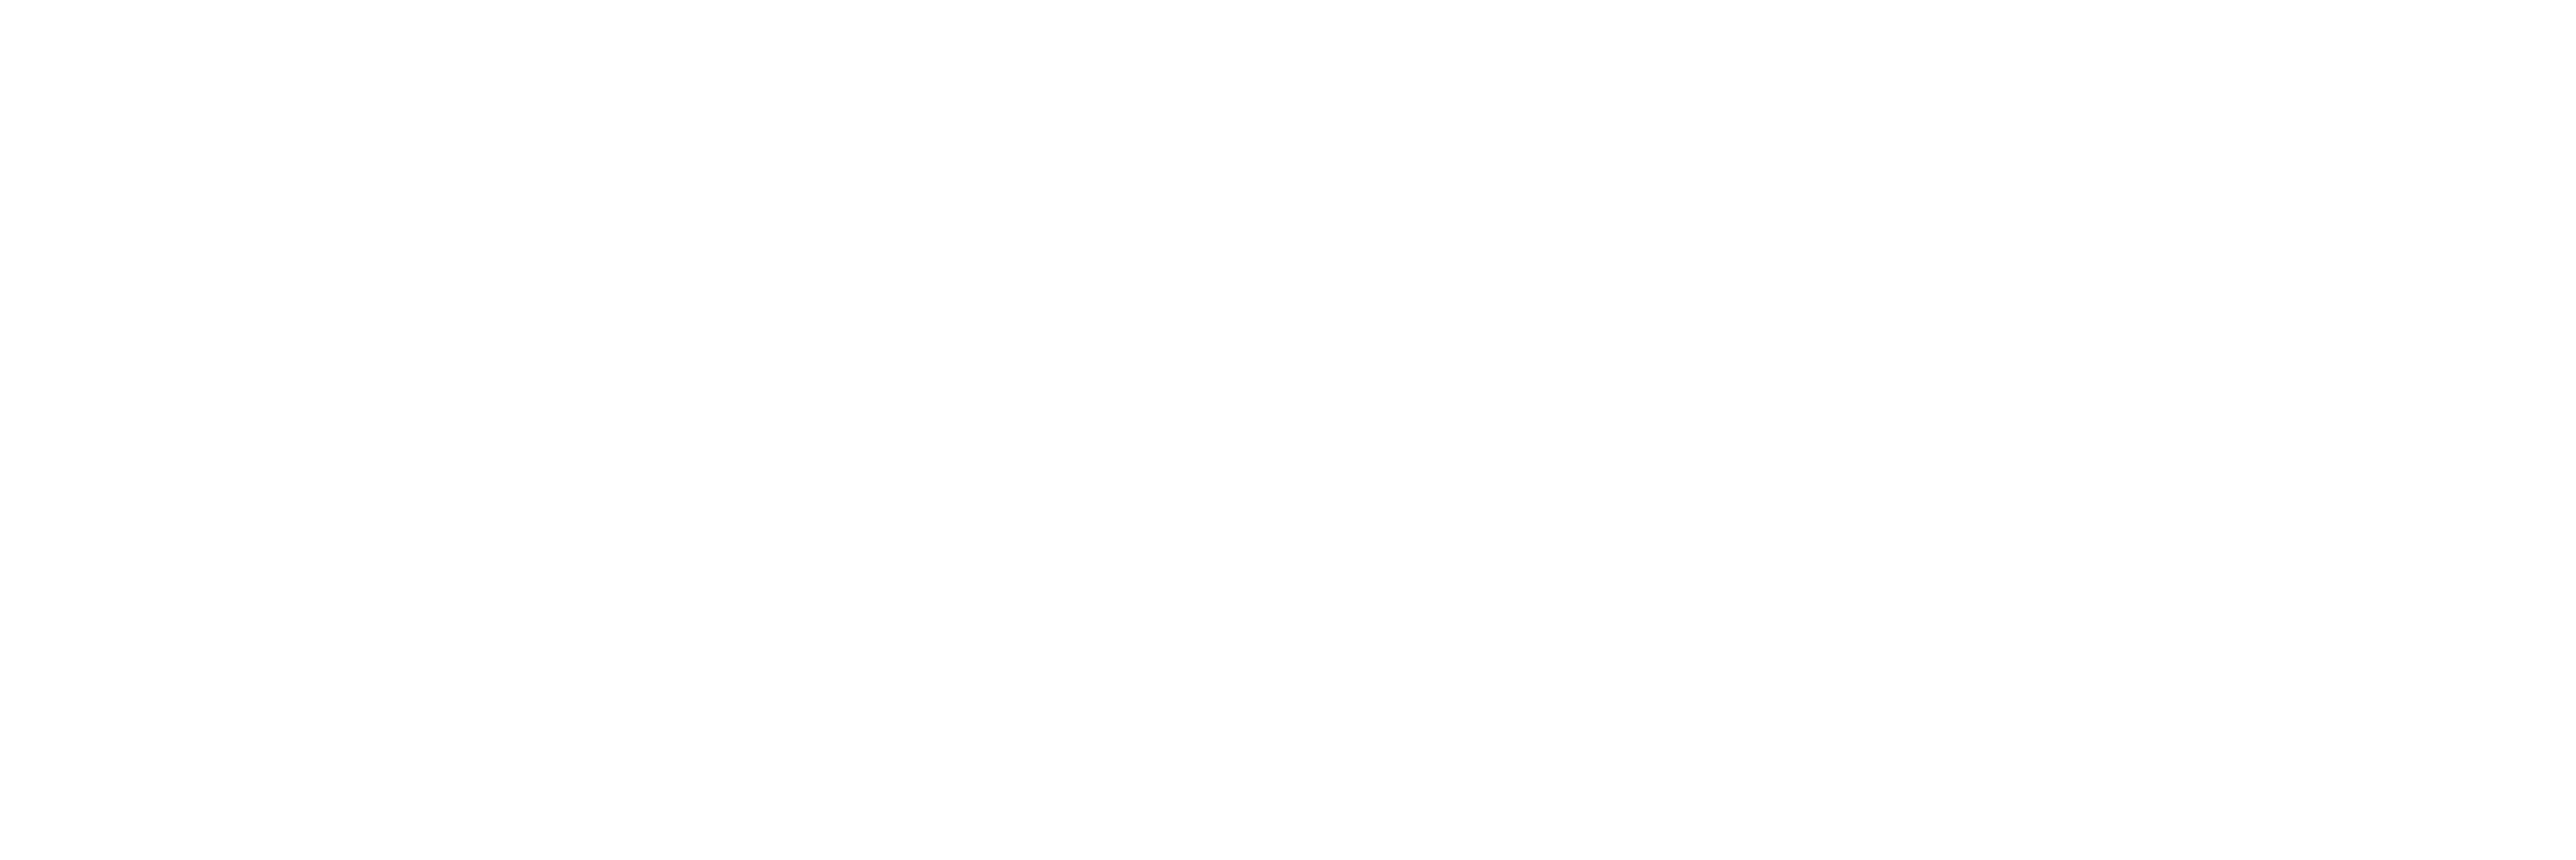 Chicago Podcast & Audio